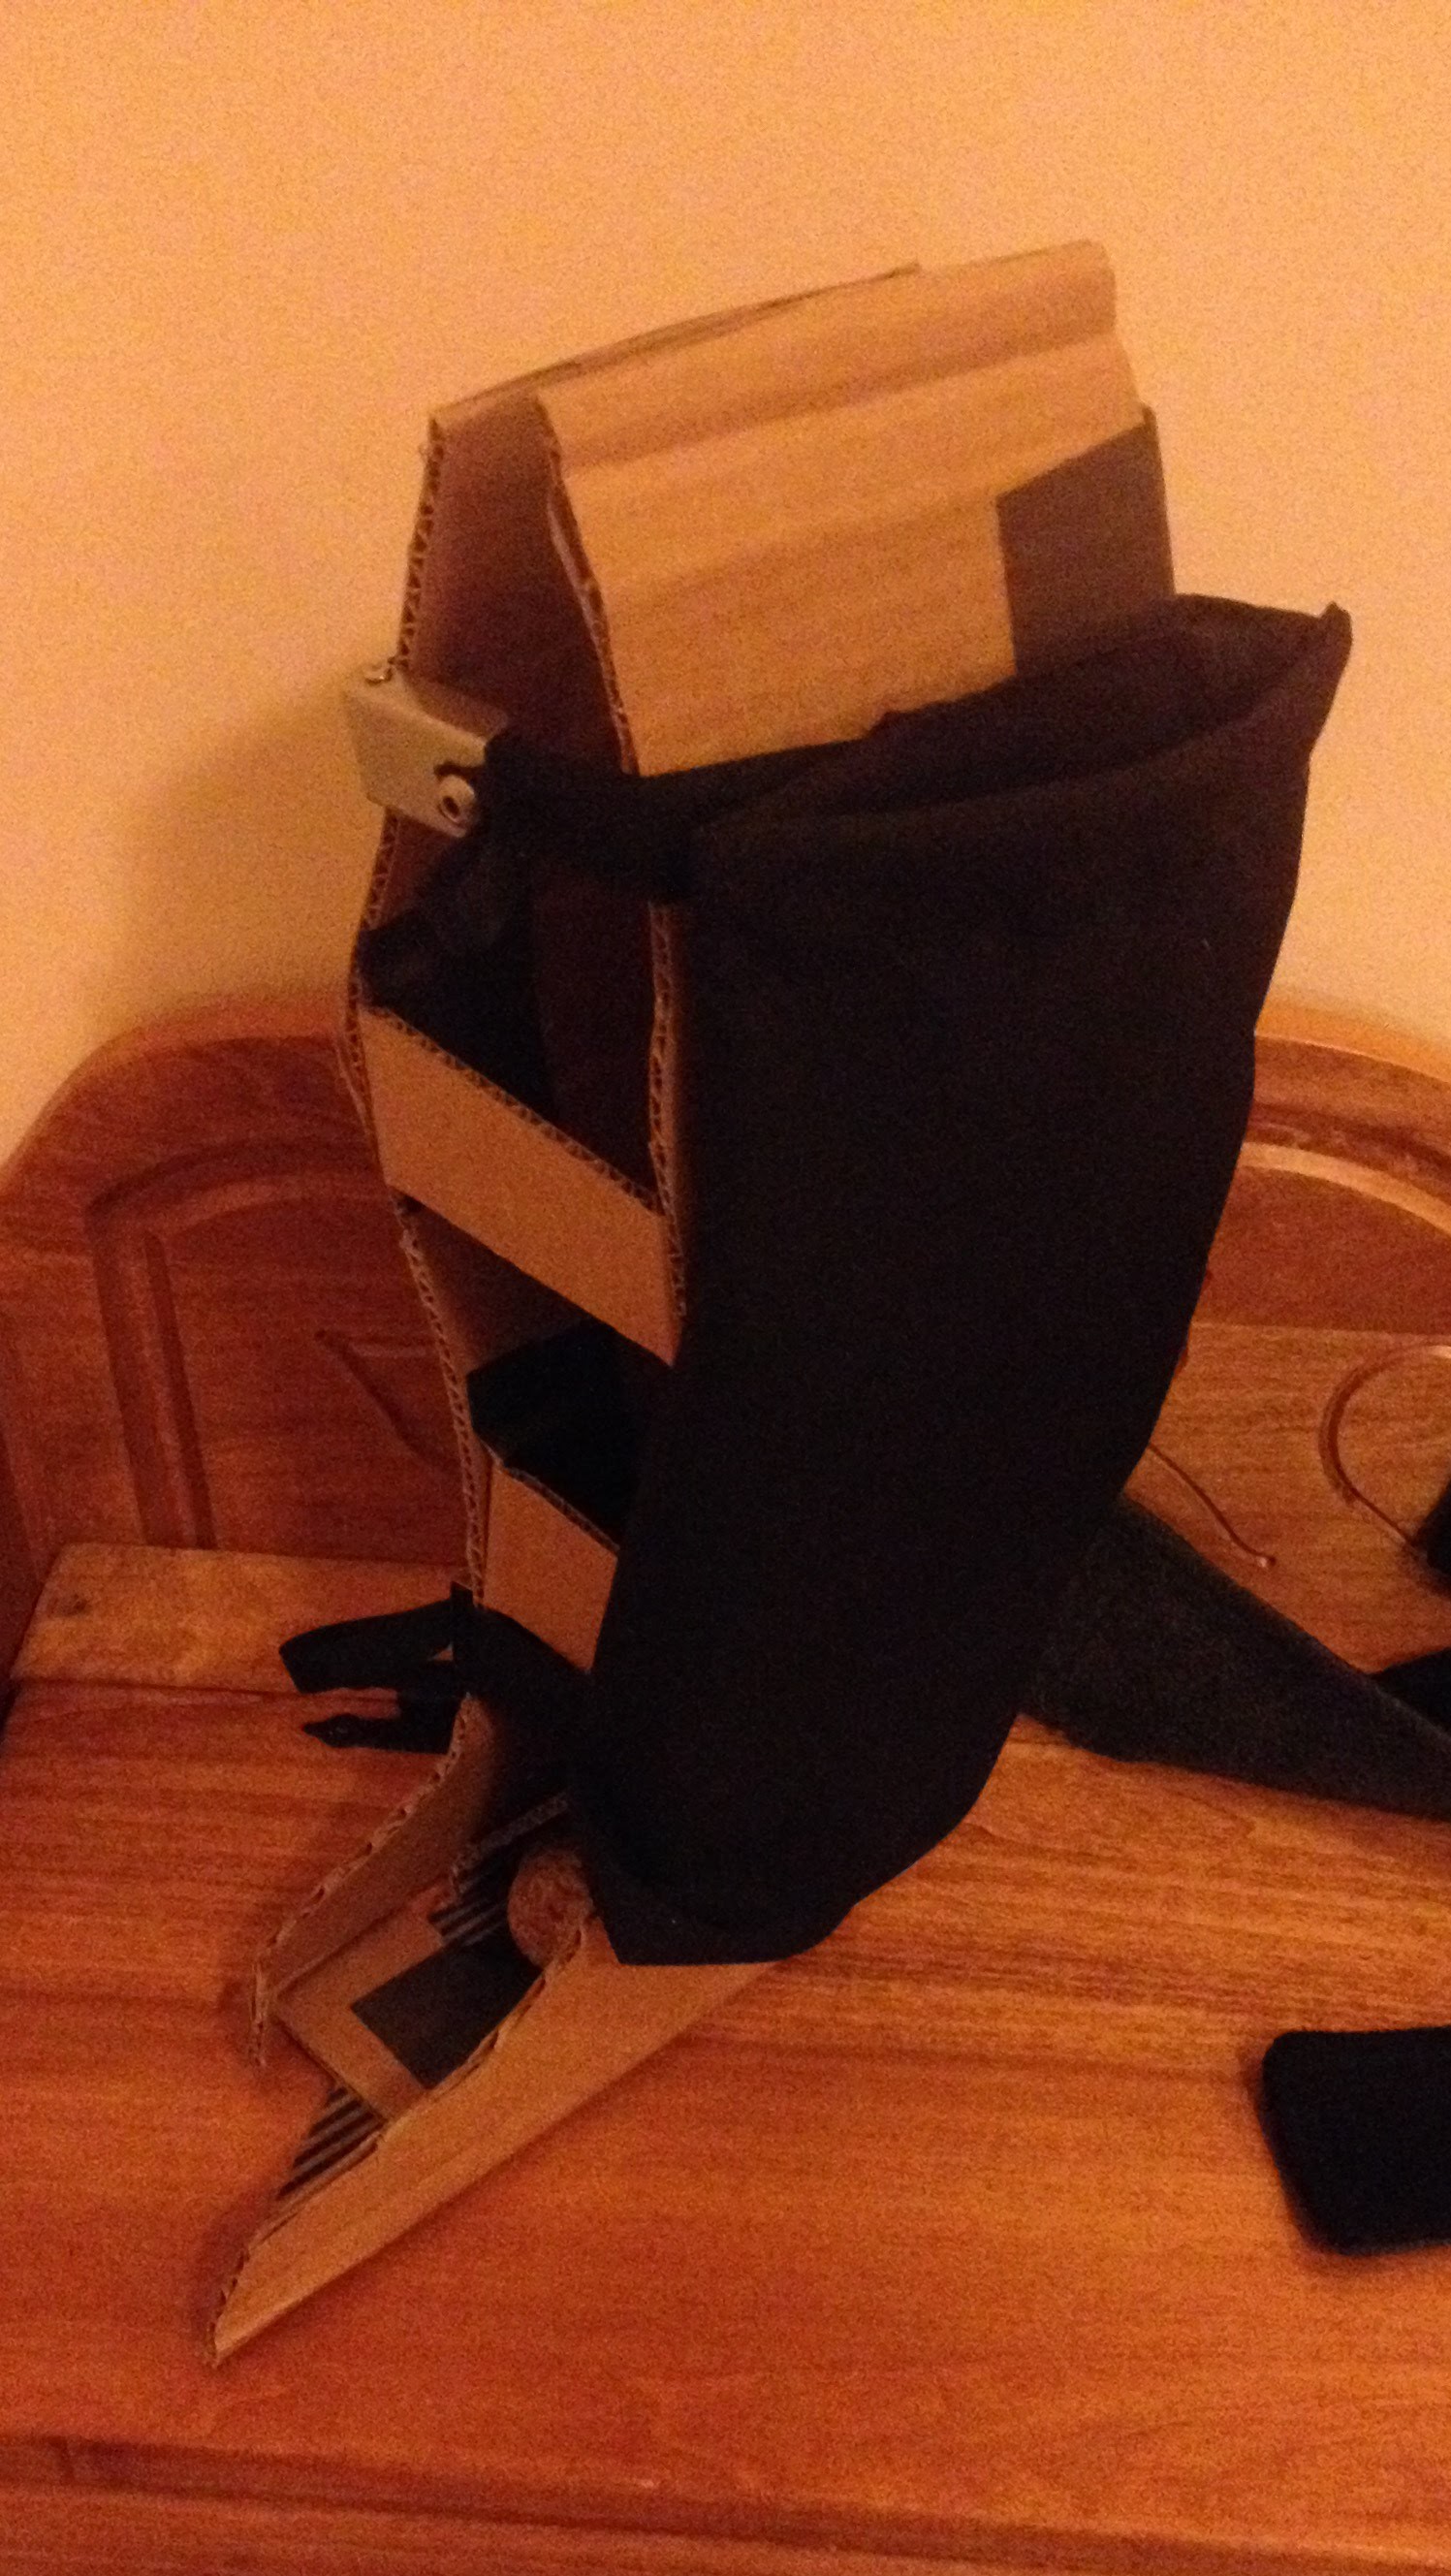 a cardboard leg form modeling a black pouch